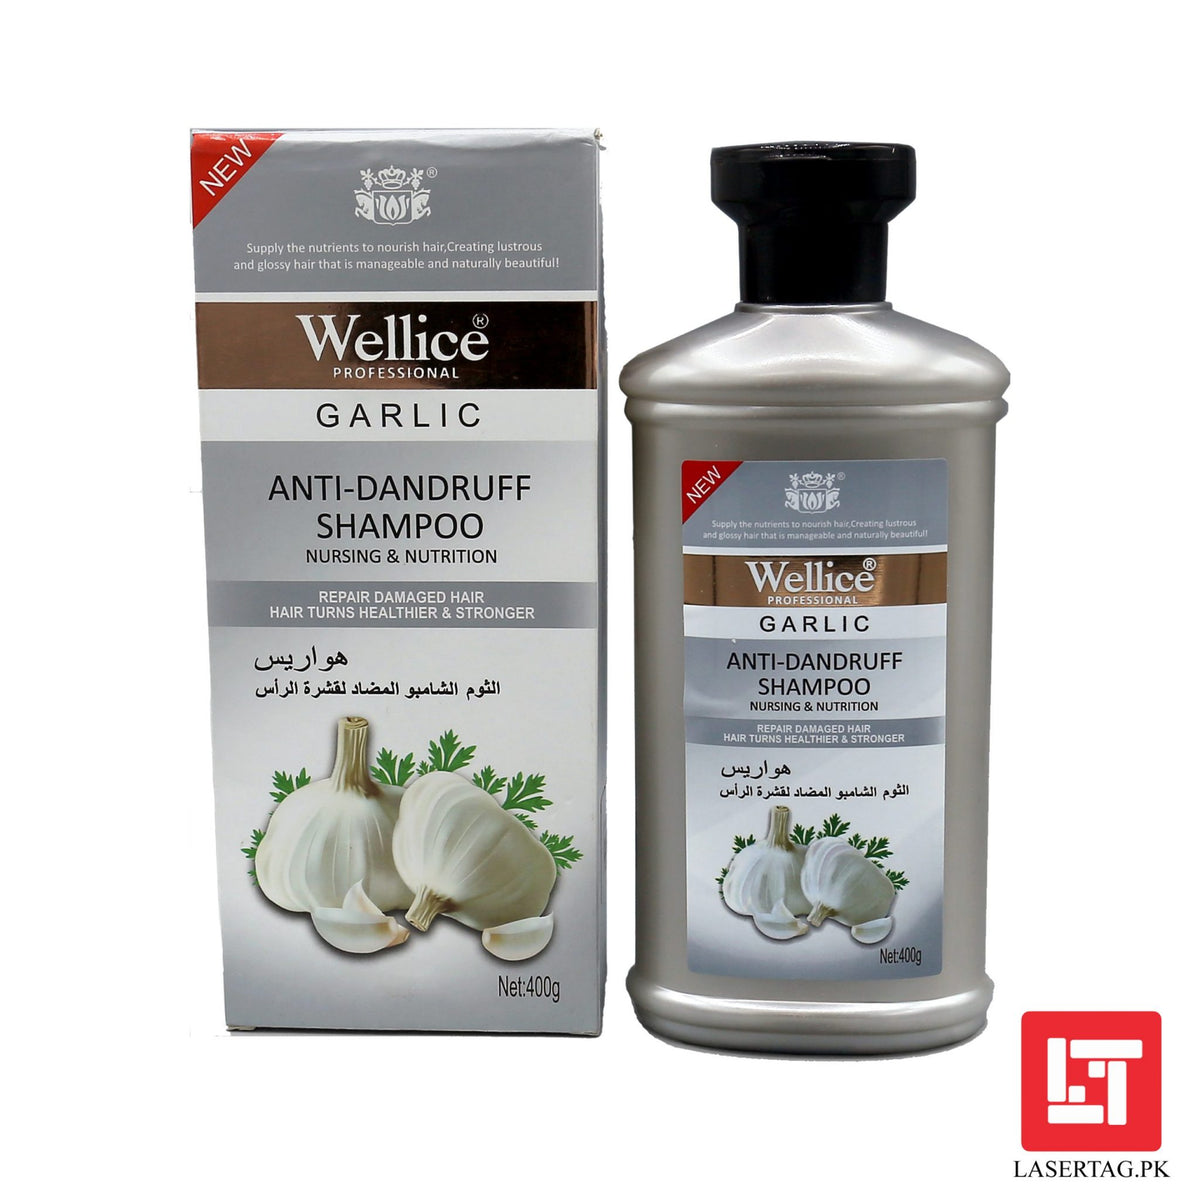 Wellice Garlic Anti Dandruff Shampoo Nursing &amp; Nutrition Repair Damged Hair Hair Turns Healthier &amp; Stronger 400g freeshipping - lasertag.pk